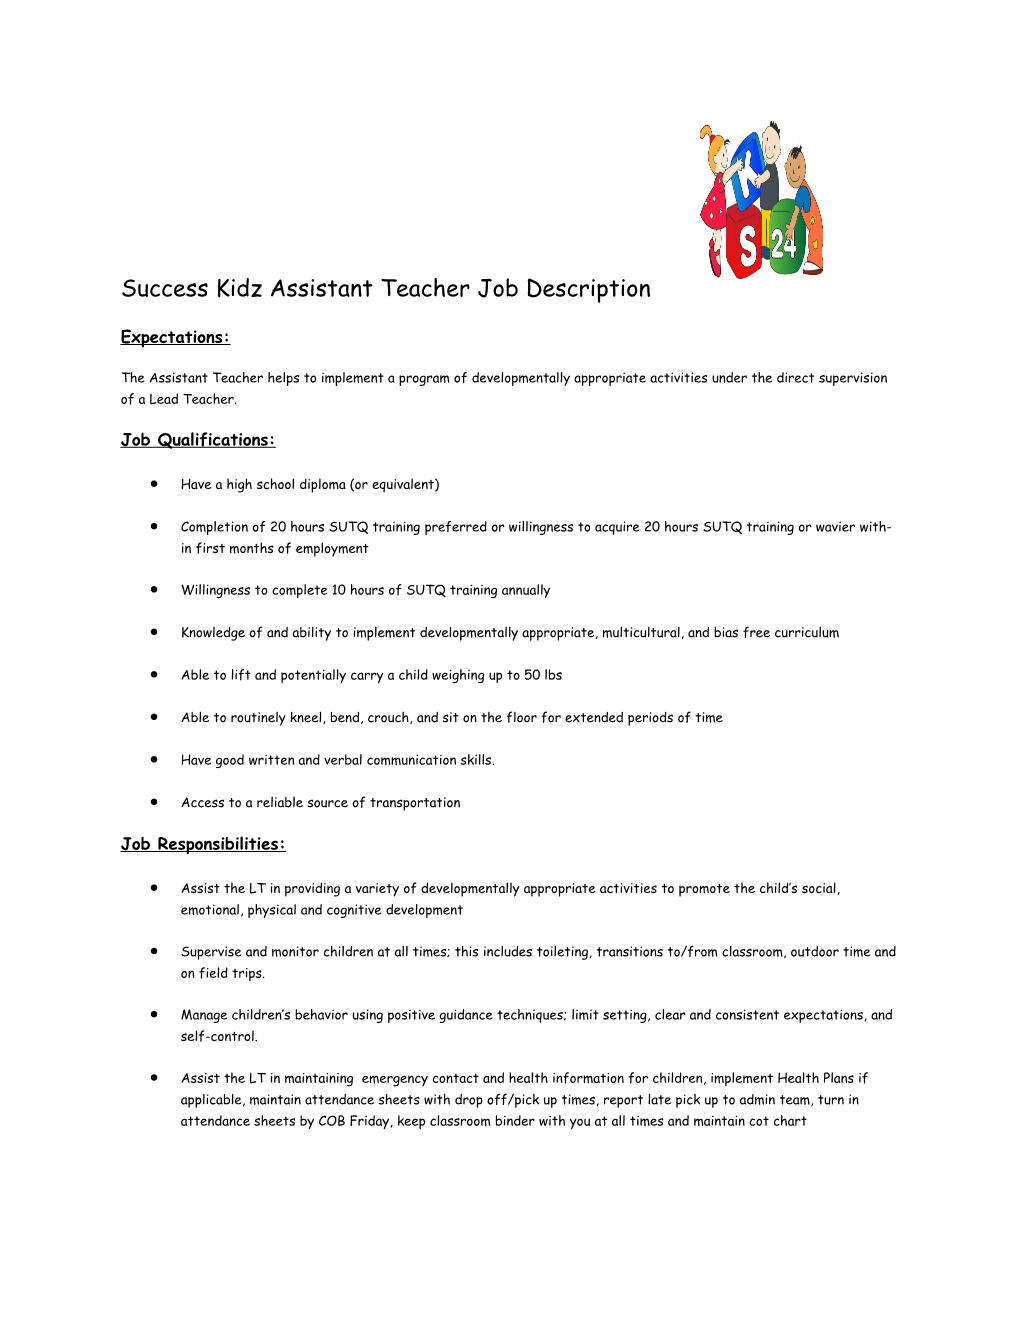 Success Kidz Assistant Teacher Job Description